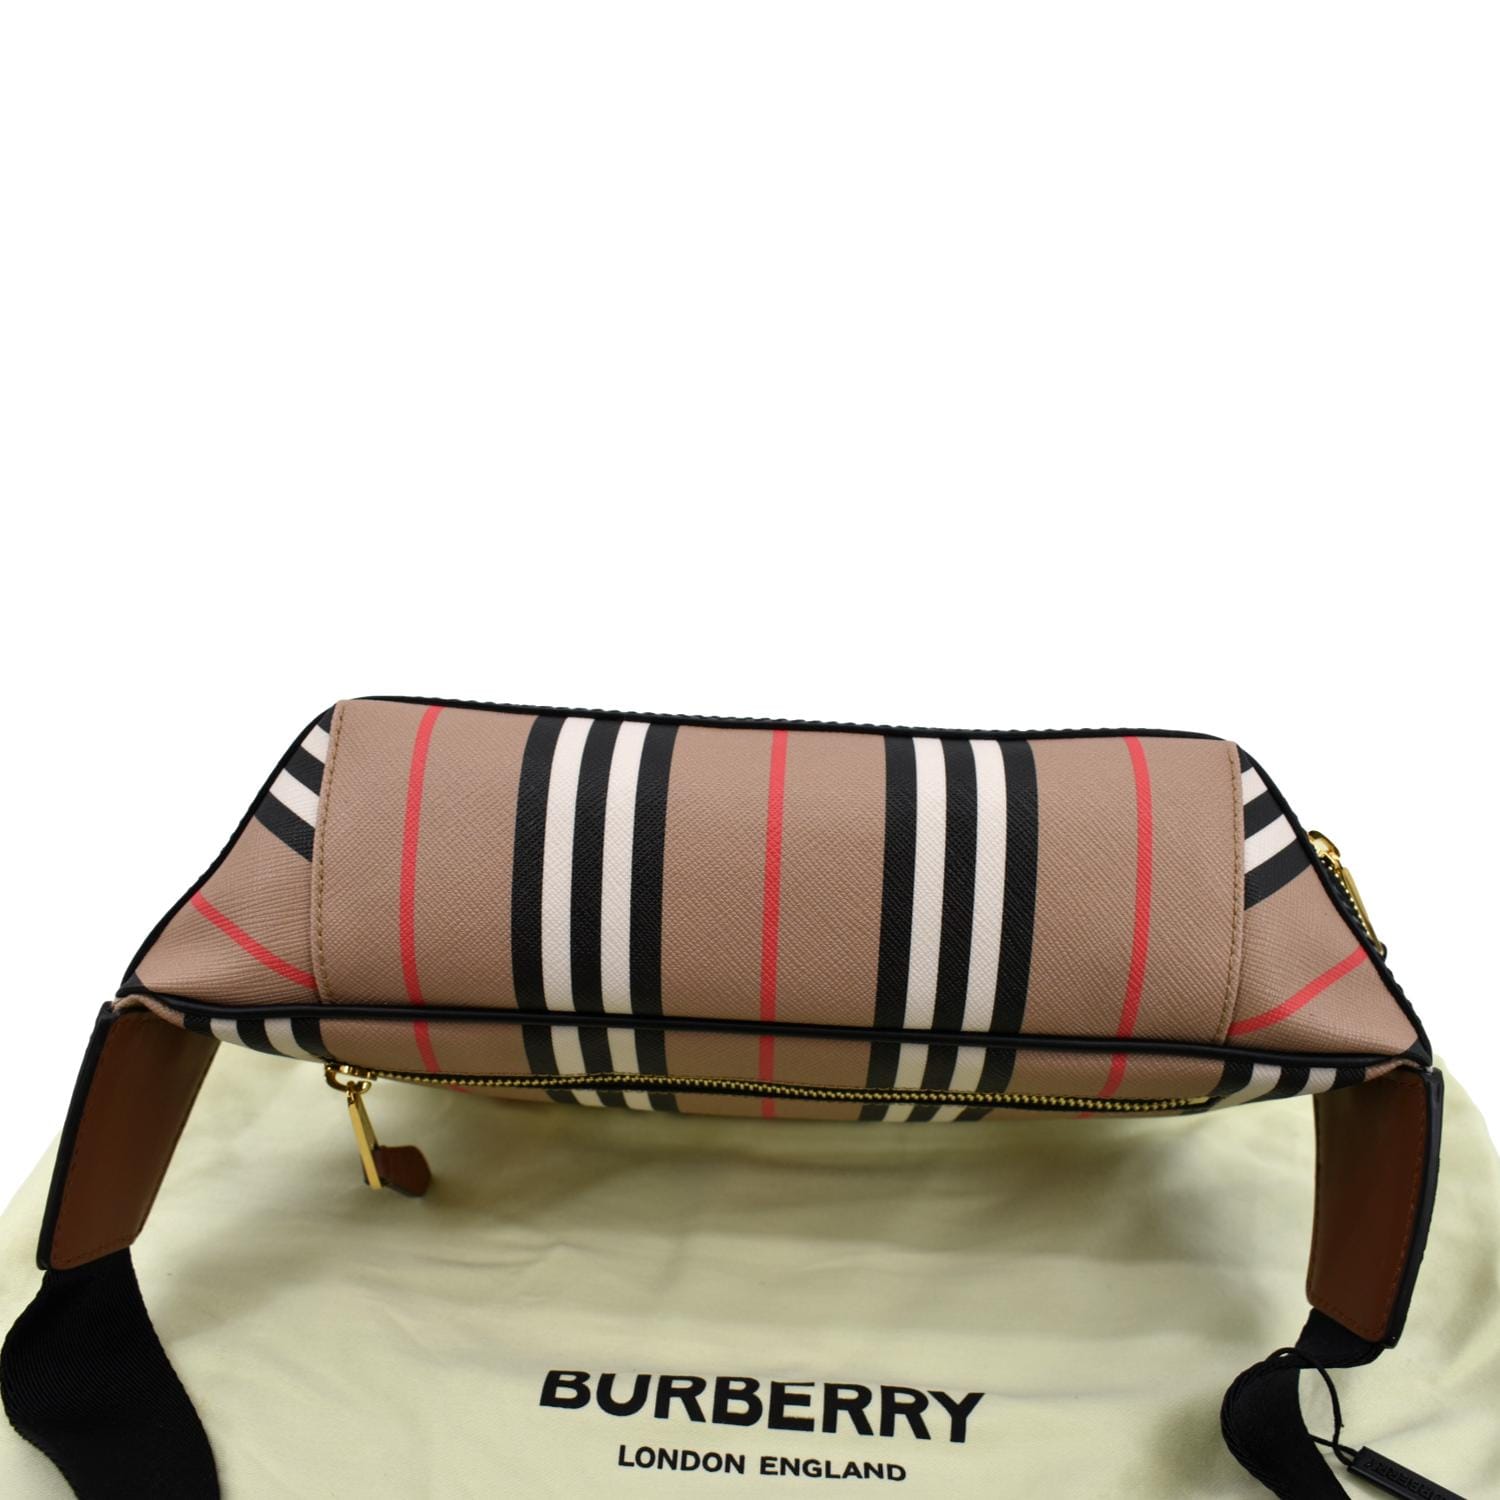 Burberry Black Quilted Fabric Medium Sonny Bum Bag Burberry